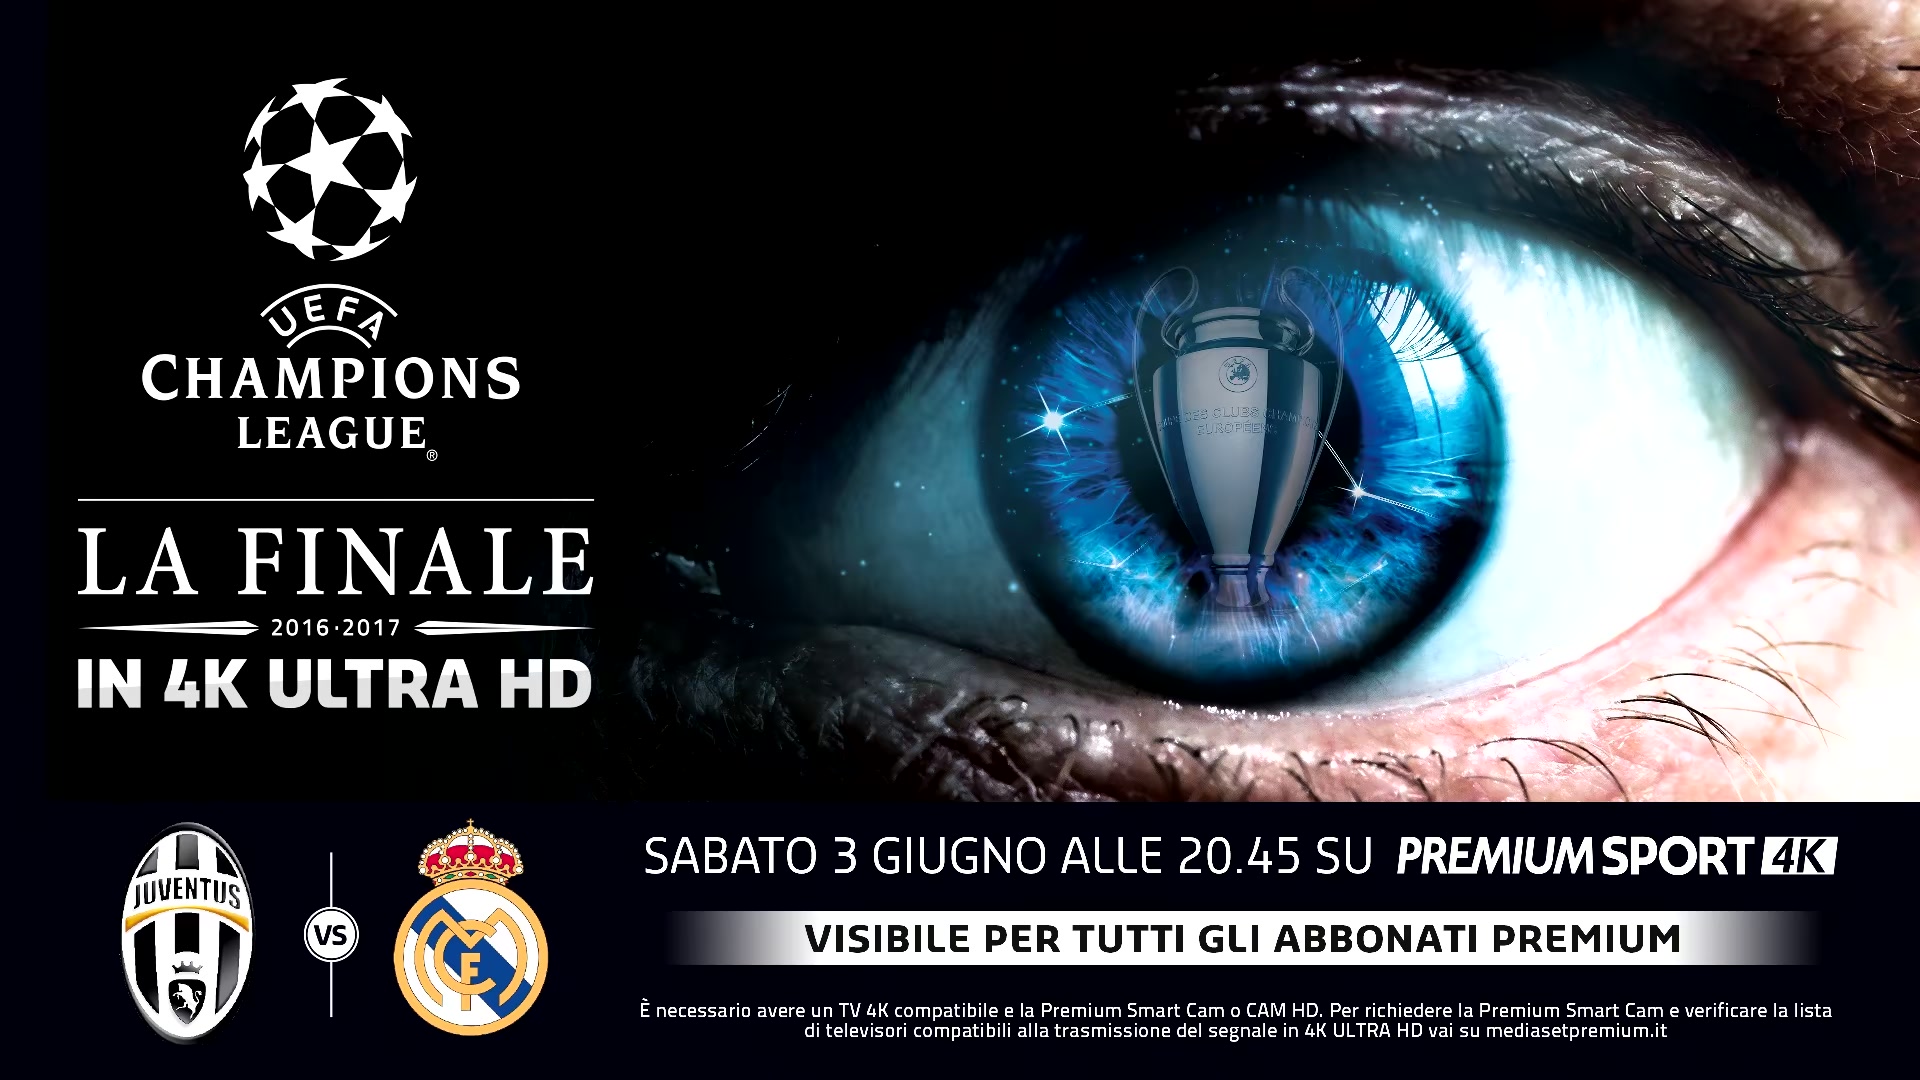 Champions, Mediaset lancia Juventus-Real Madrid, diretta Canale 5 HD e solo su Premium in 4K